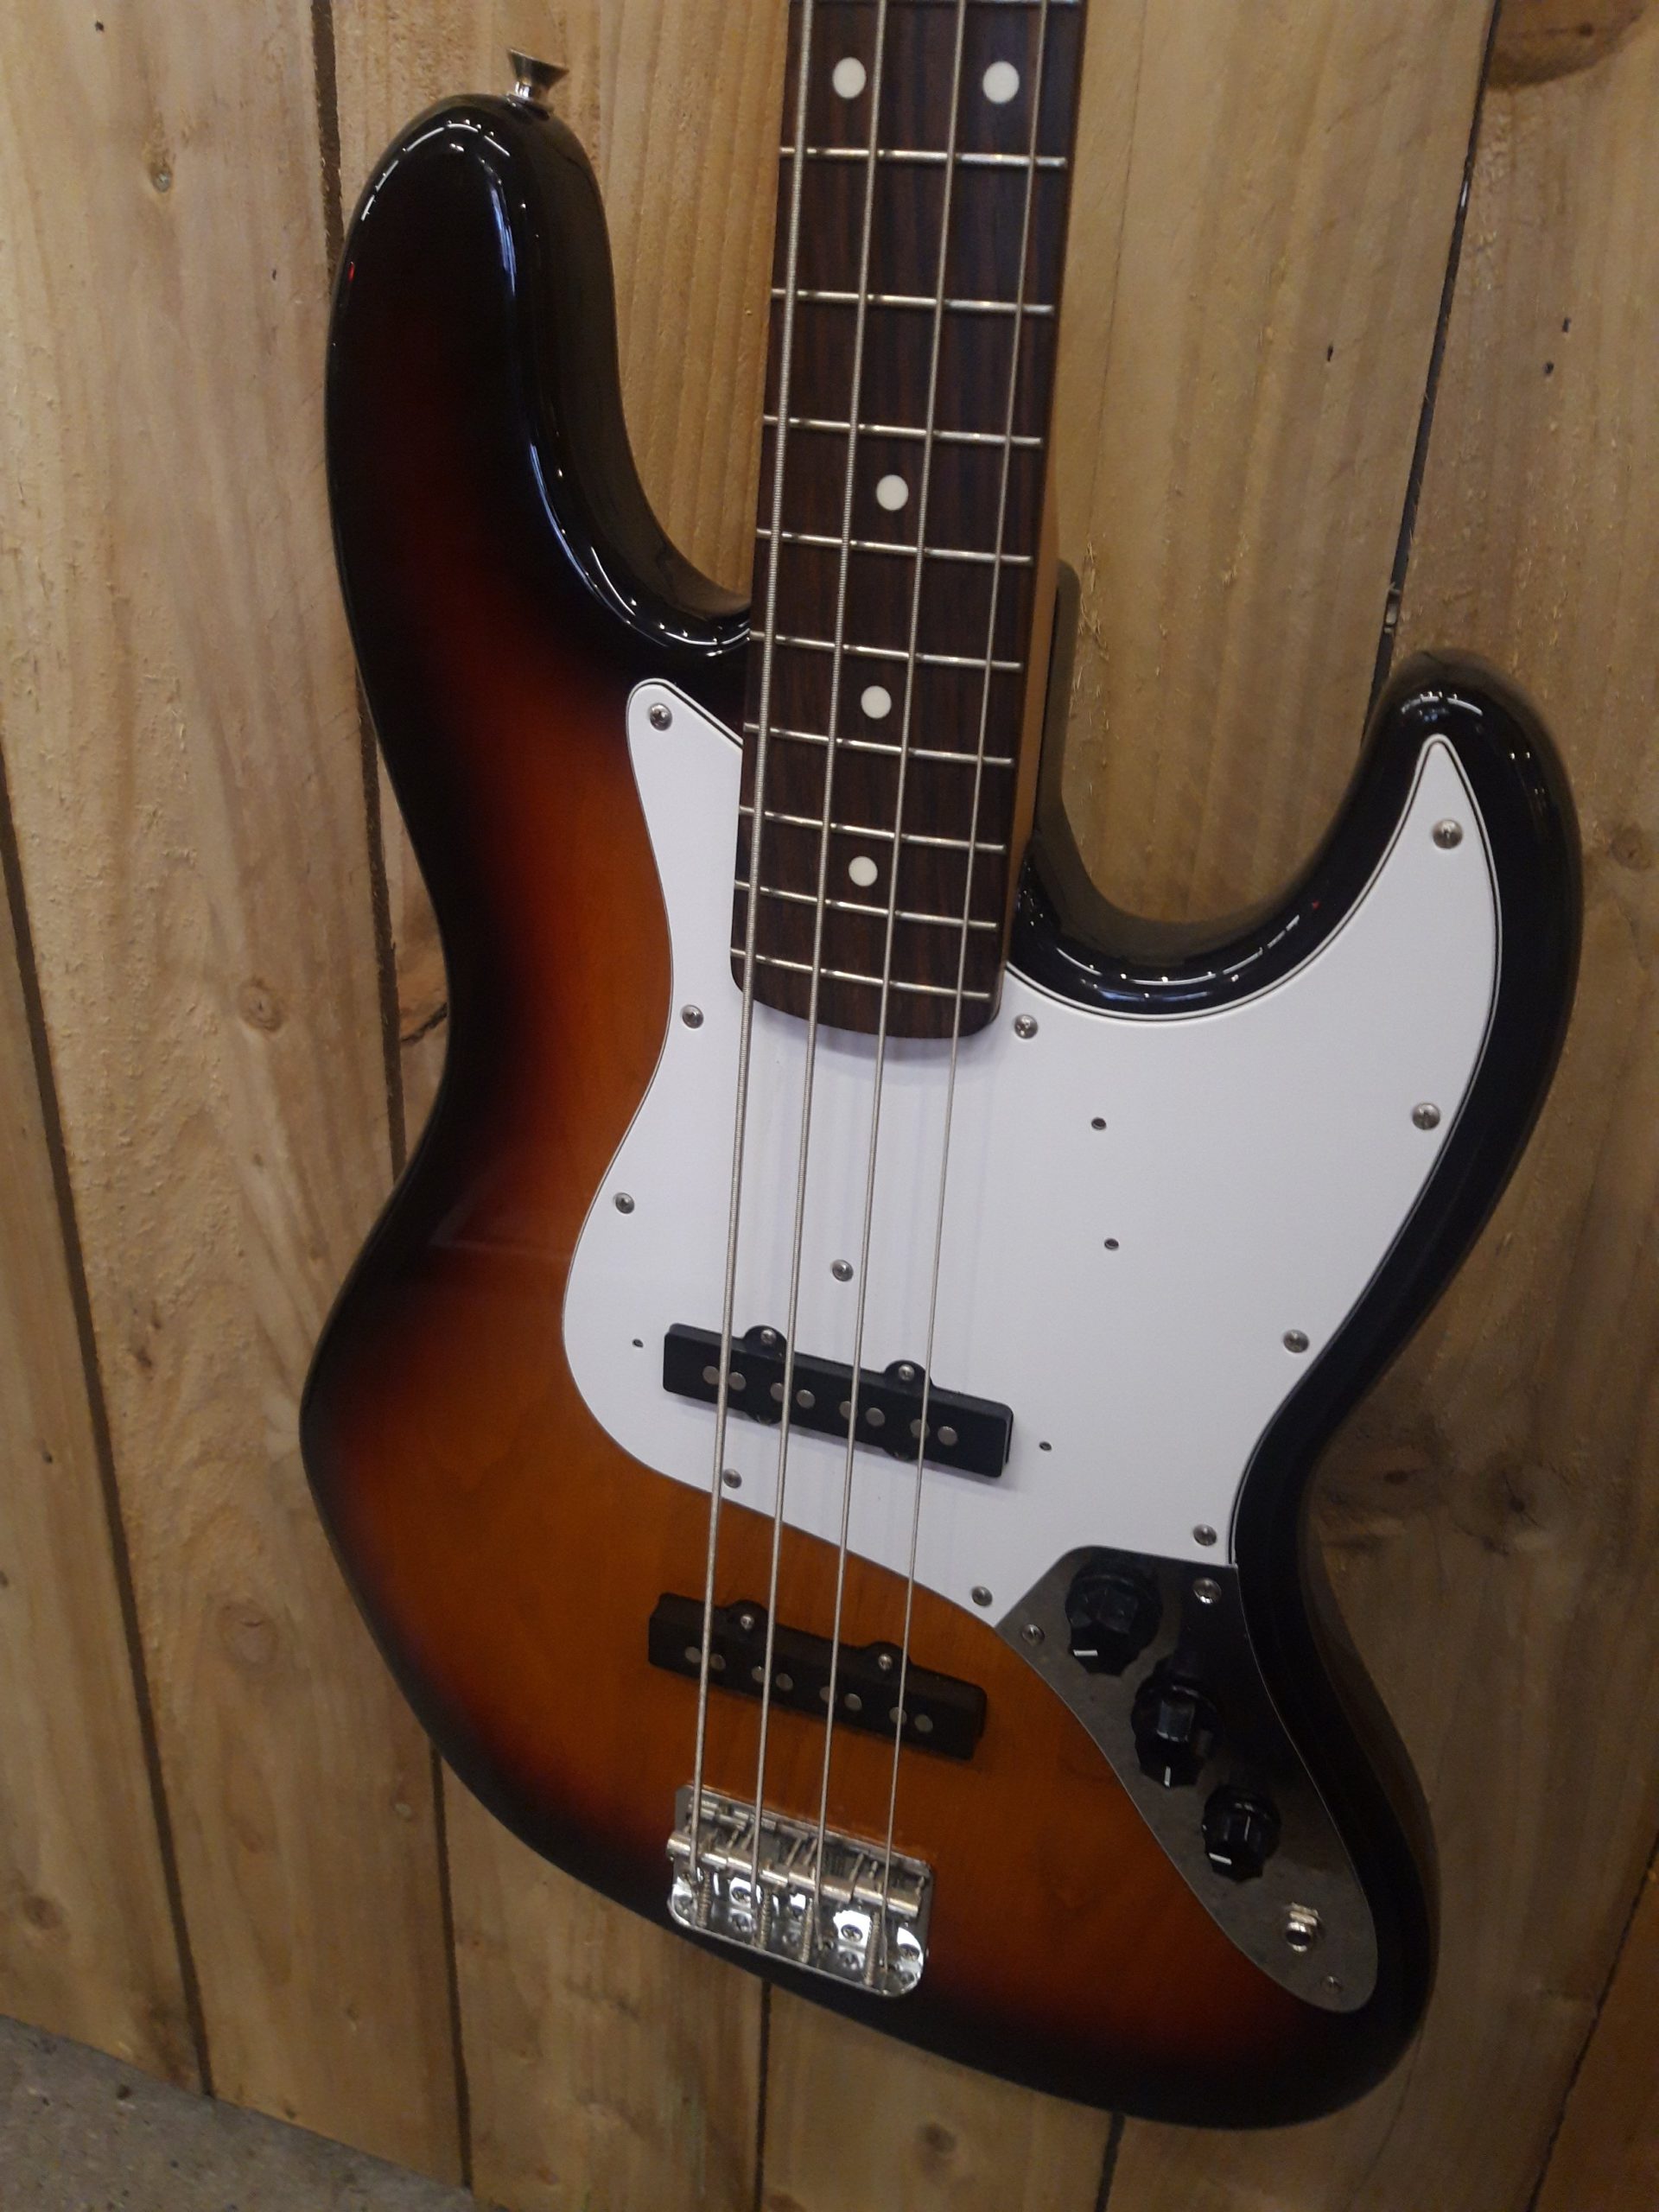 Fender 2010 JB62 Made in Japan Jazz Bass in Suburst including Hard Case